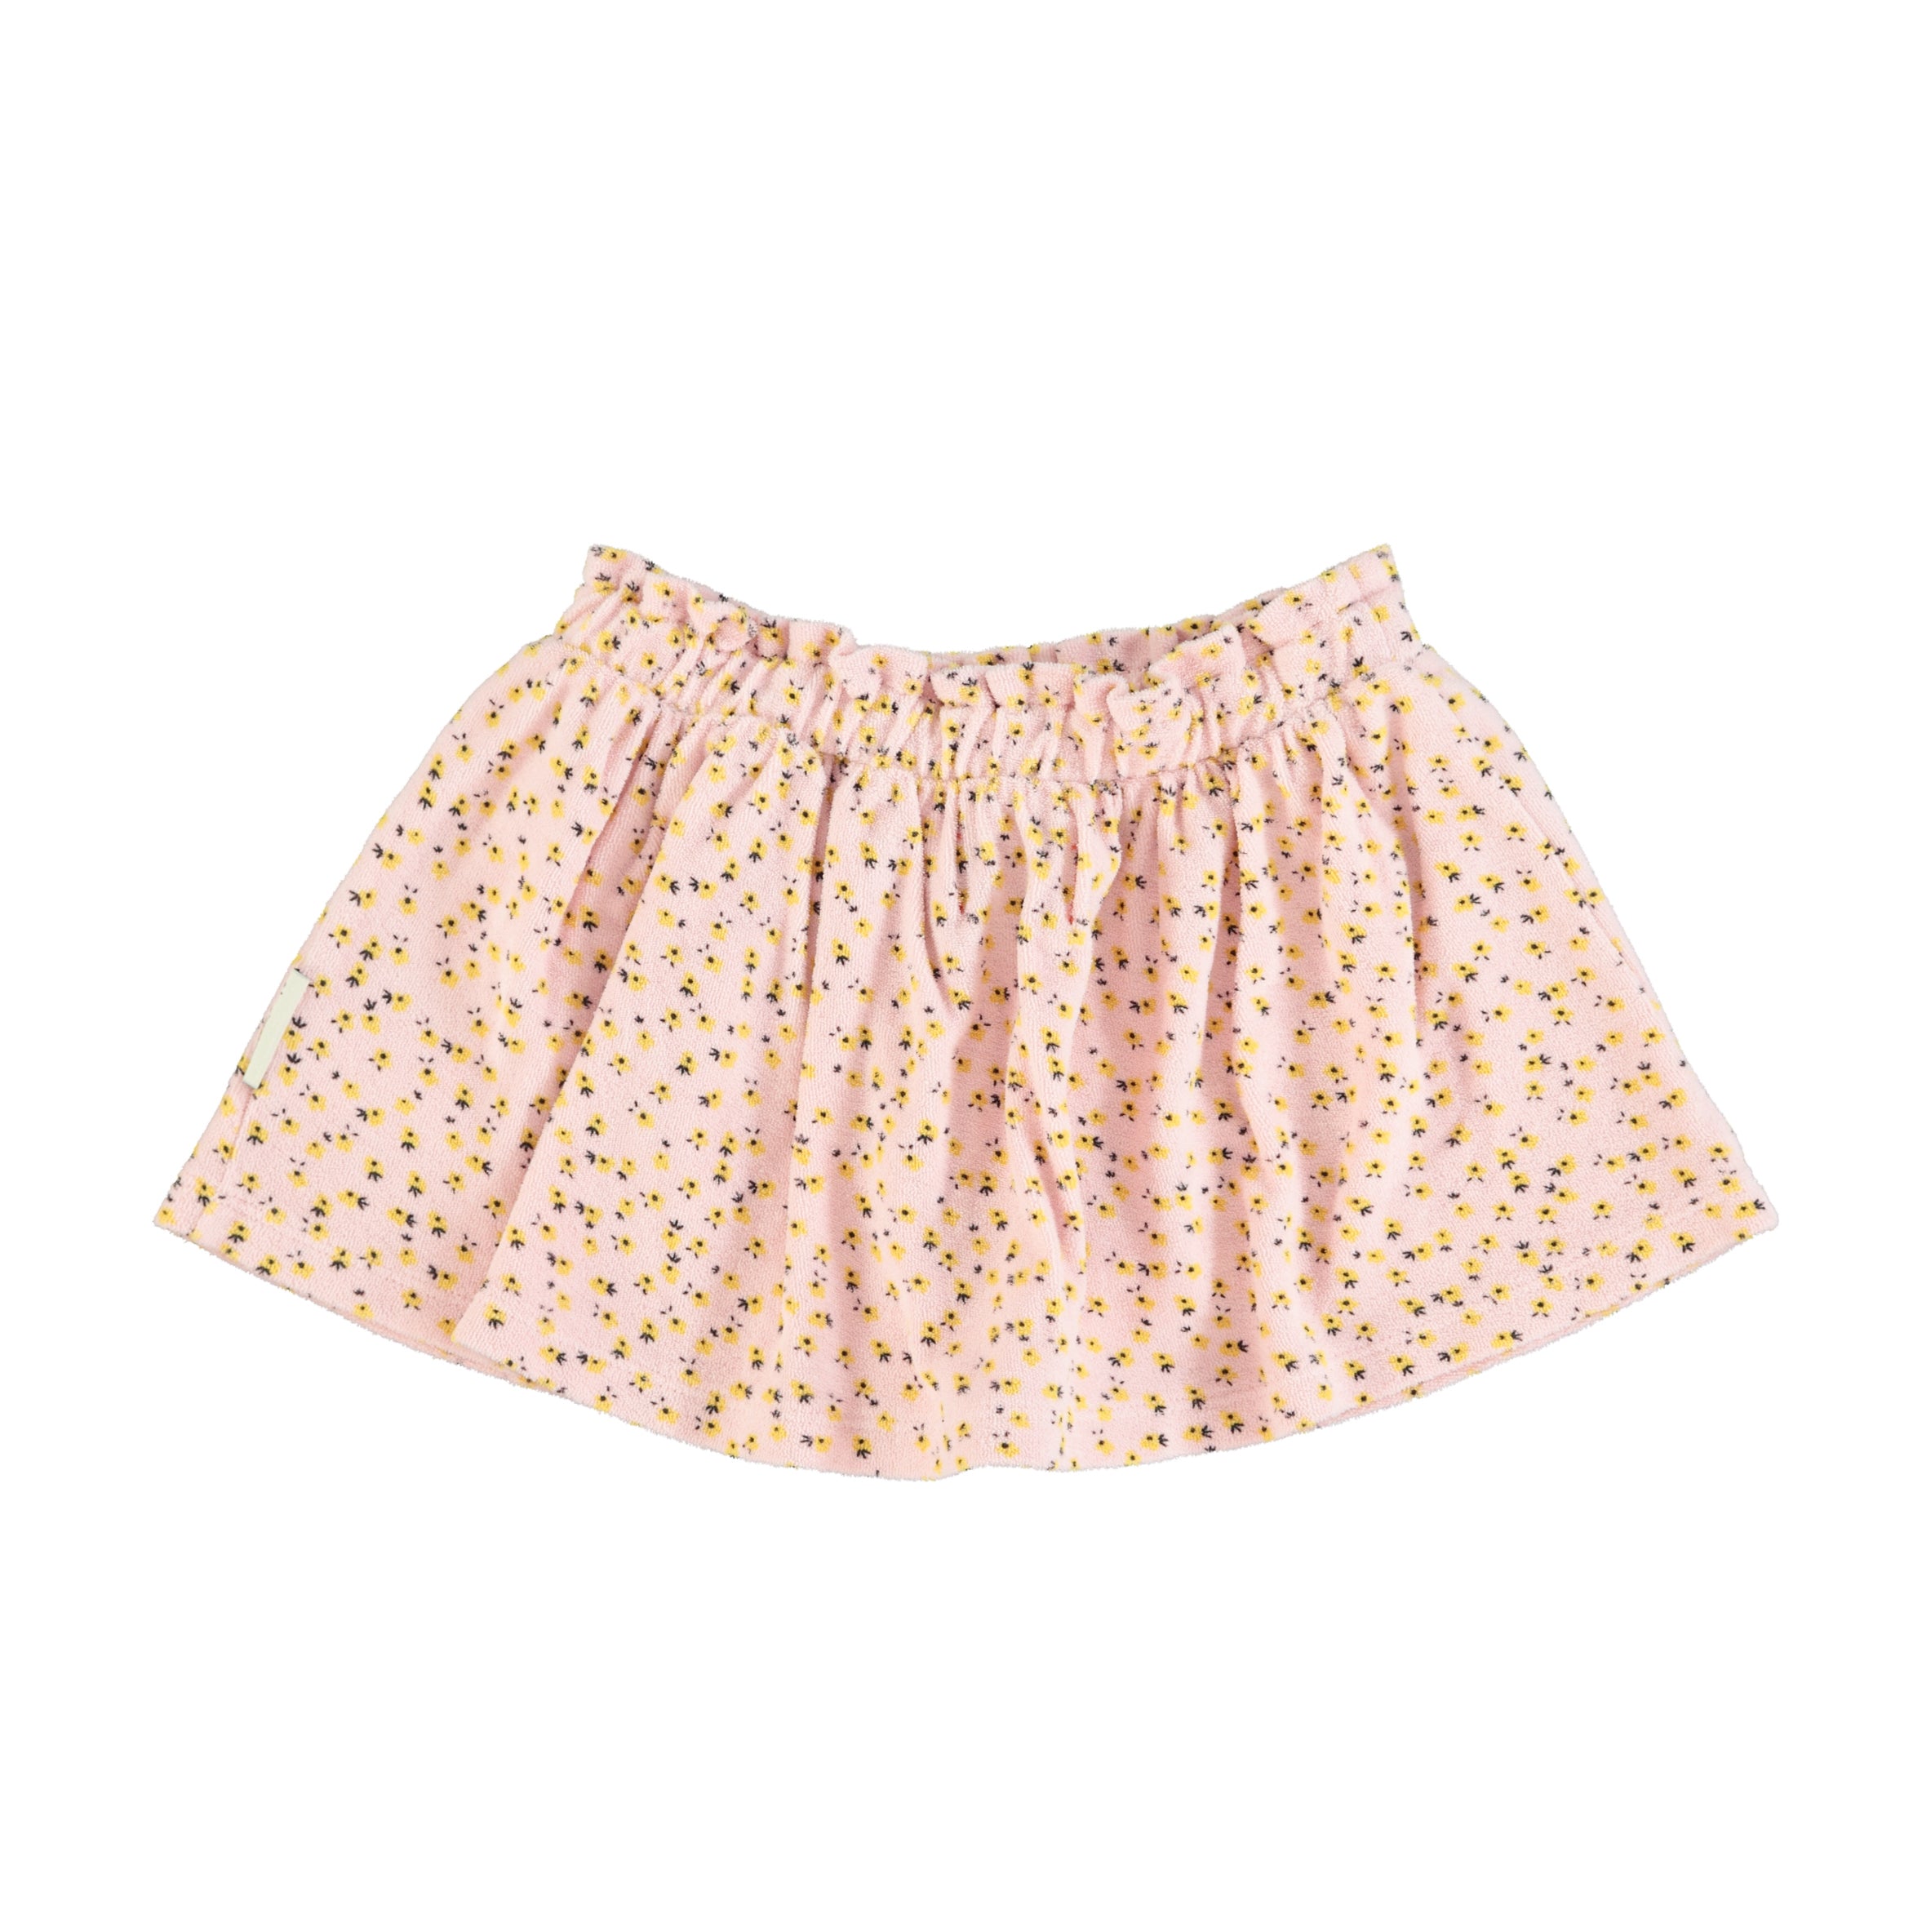 Piupiuchick Light Pink with Yellow Flowers Print Knee Length Skirt